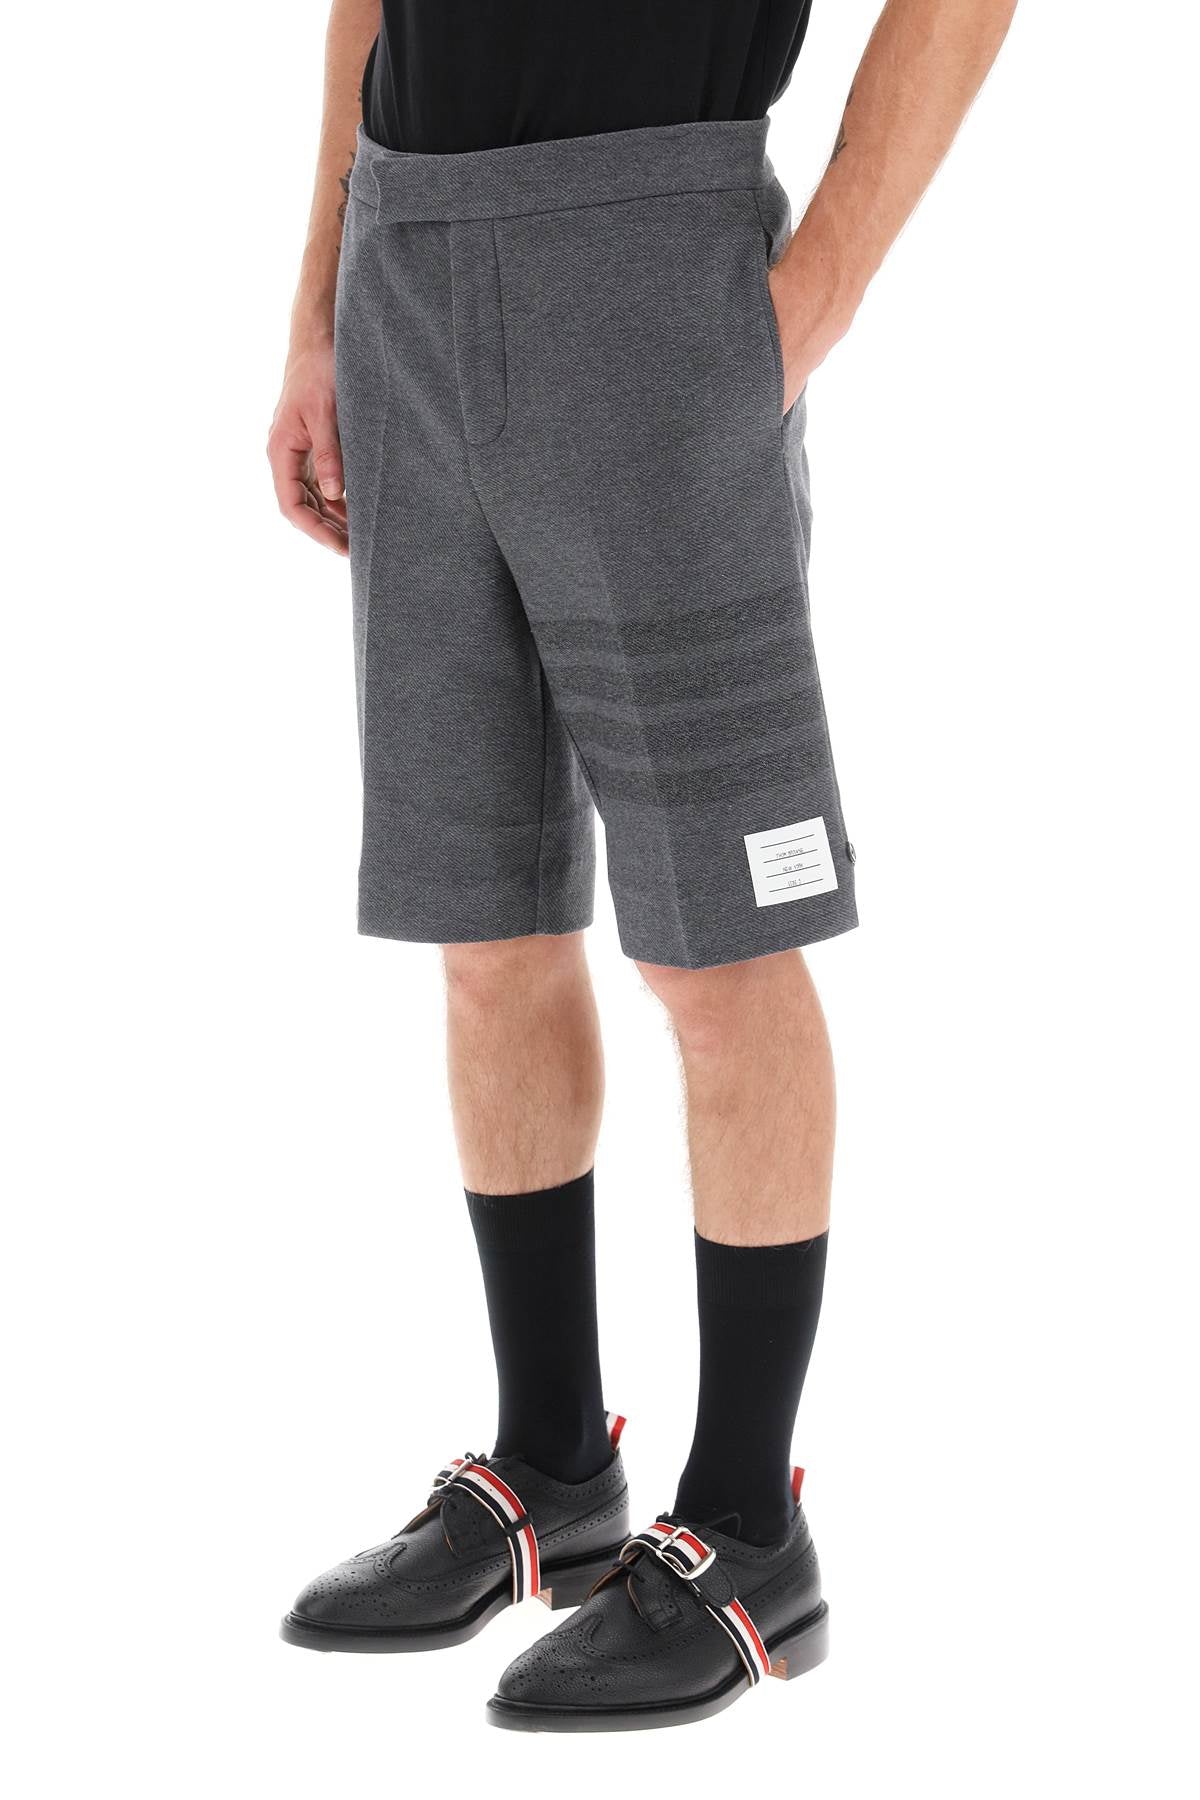 Thom browne shorts with 4-bar motif-3